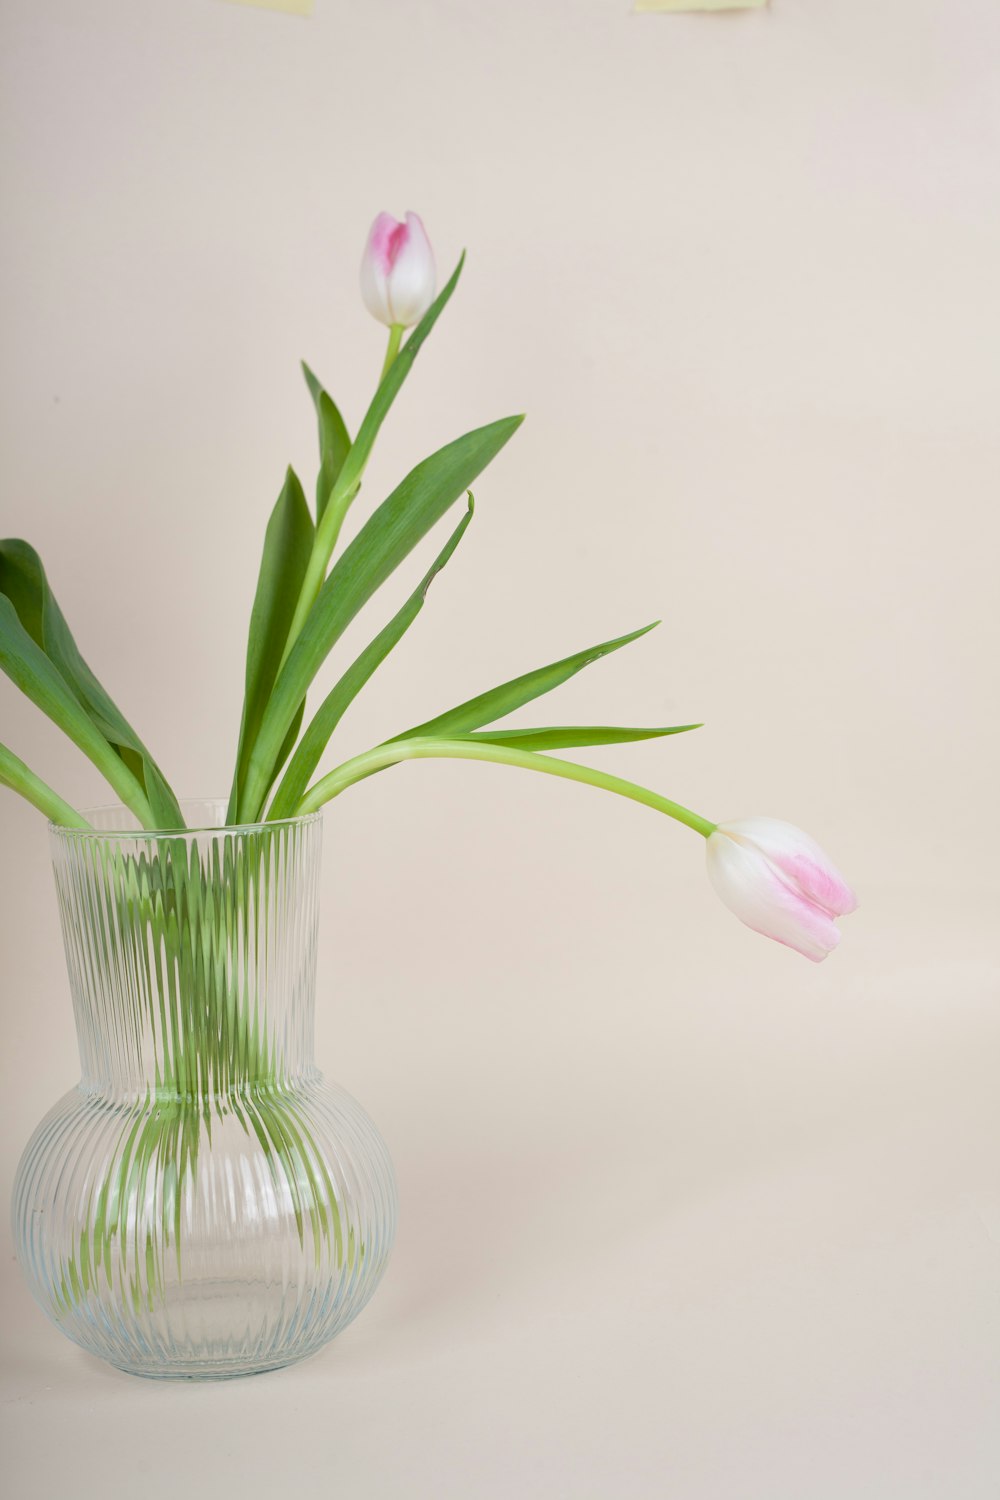 um vaso de vidro cheio de tulipas rosa e brancas